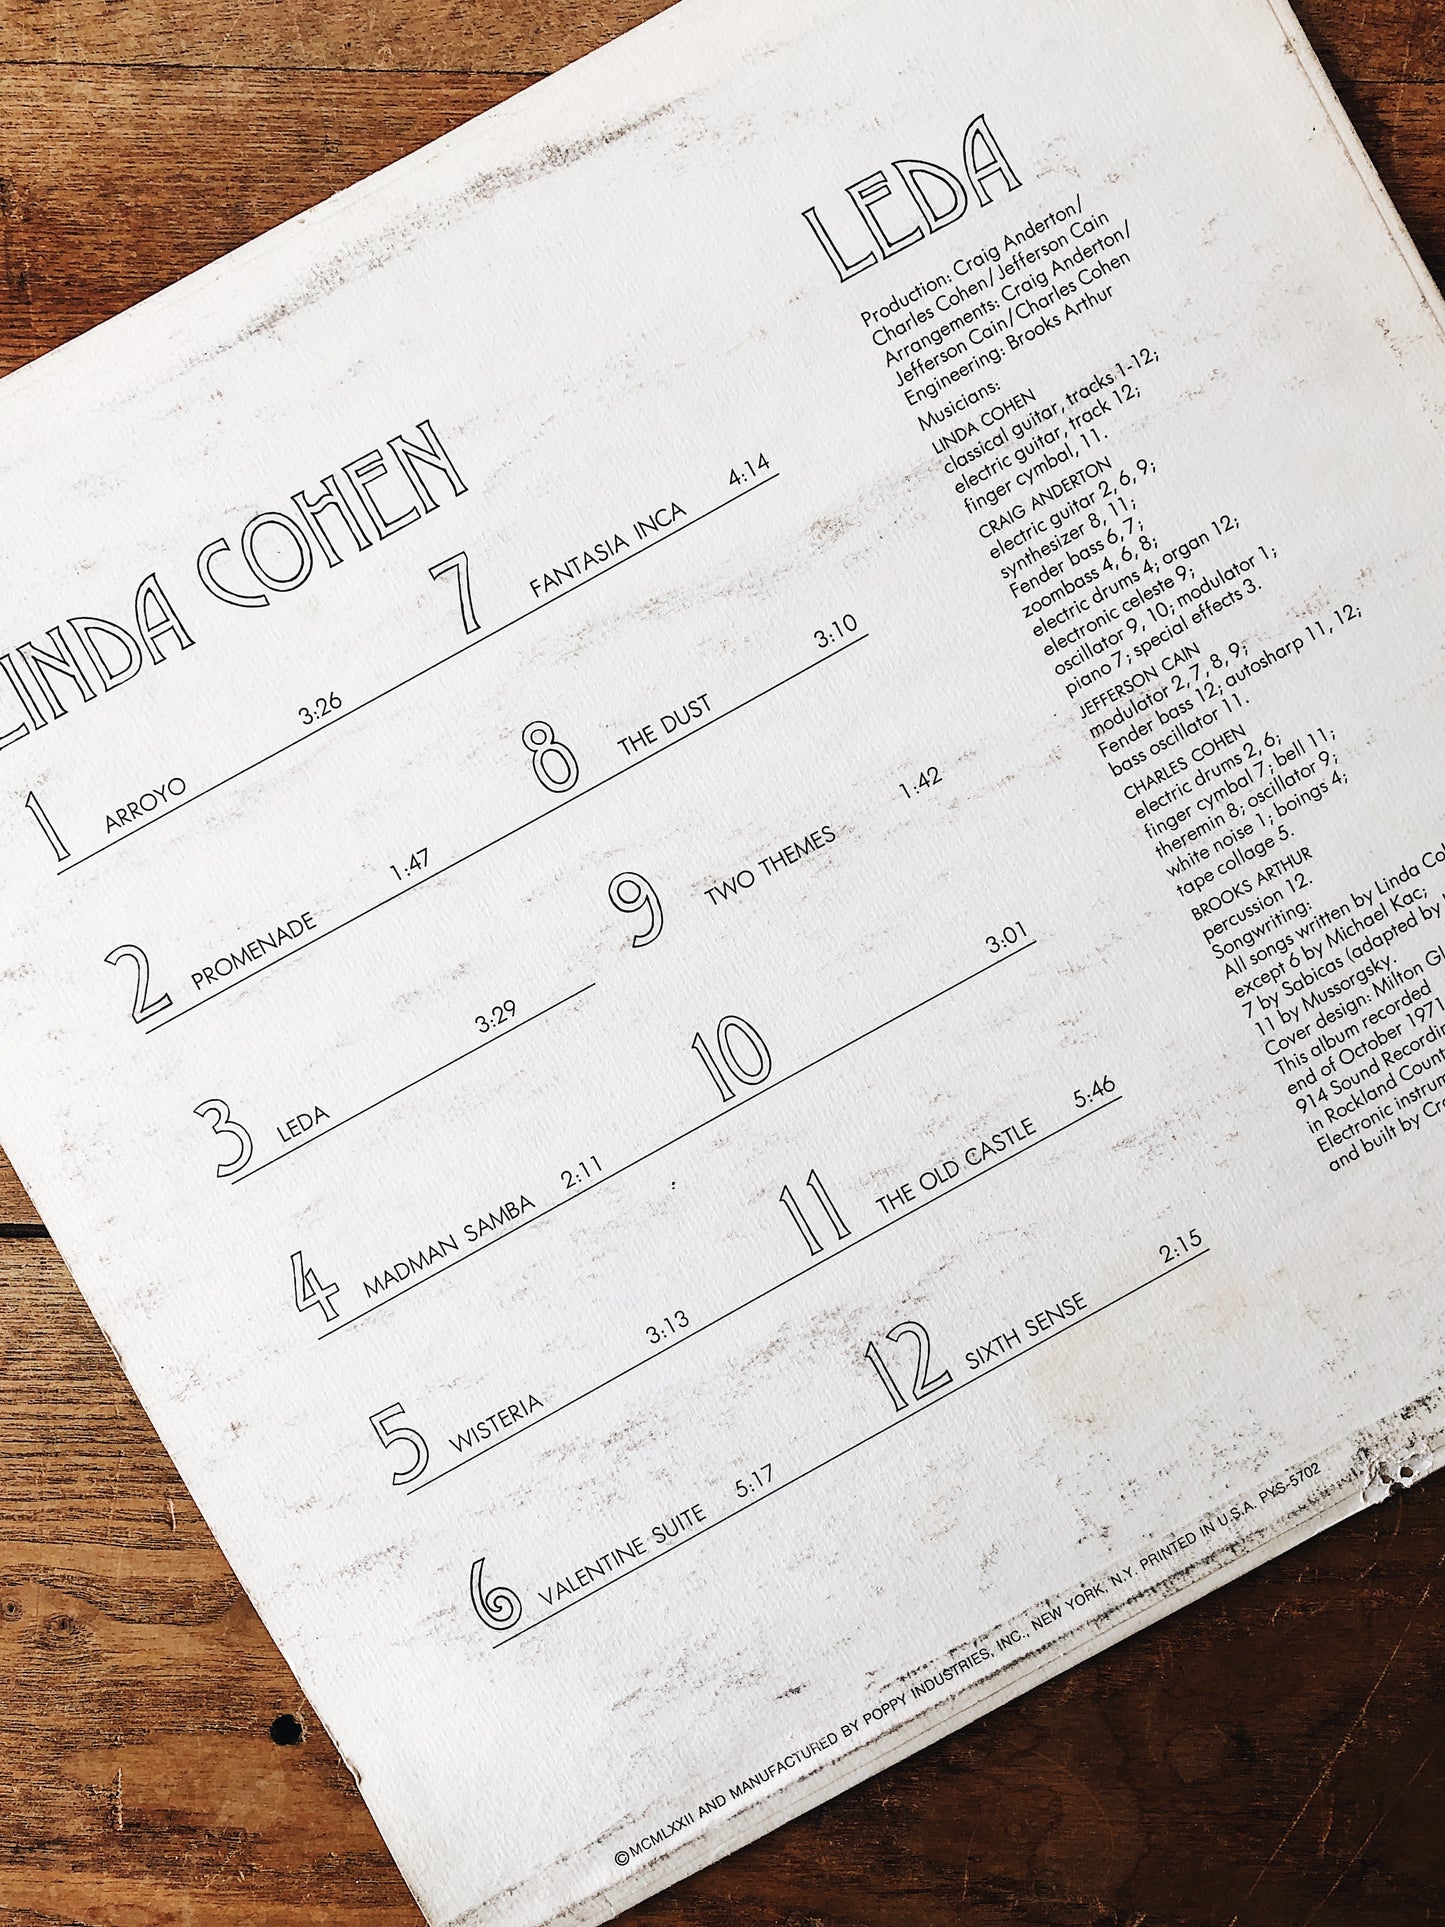 Vintage Linda Cohen Folk Album